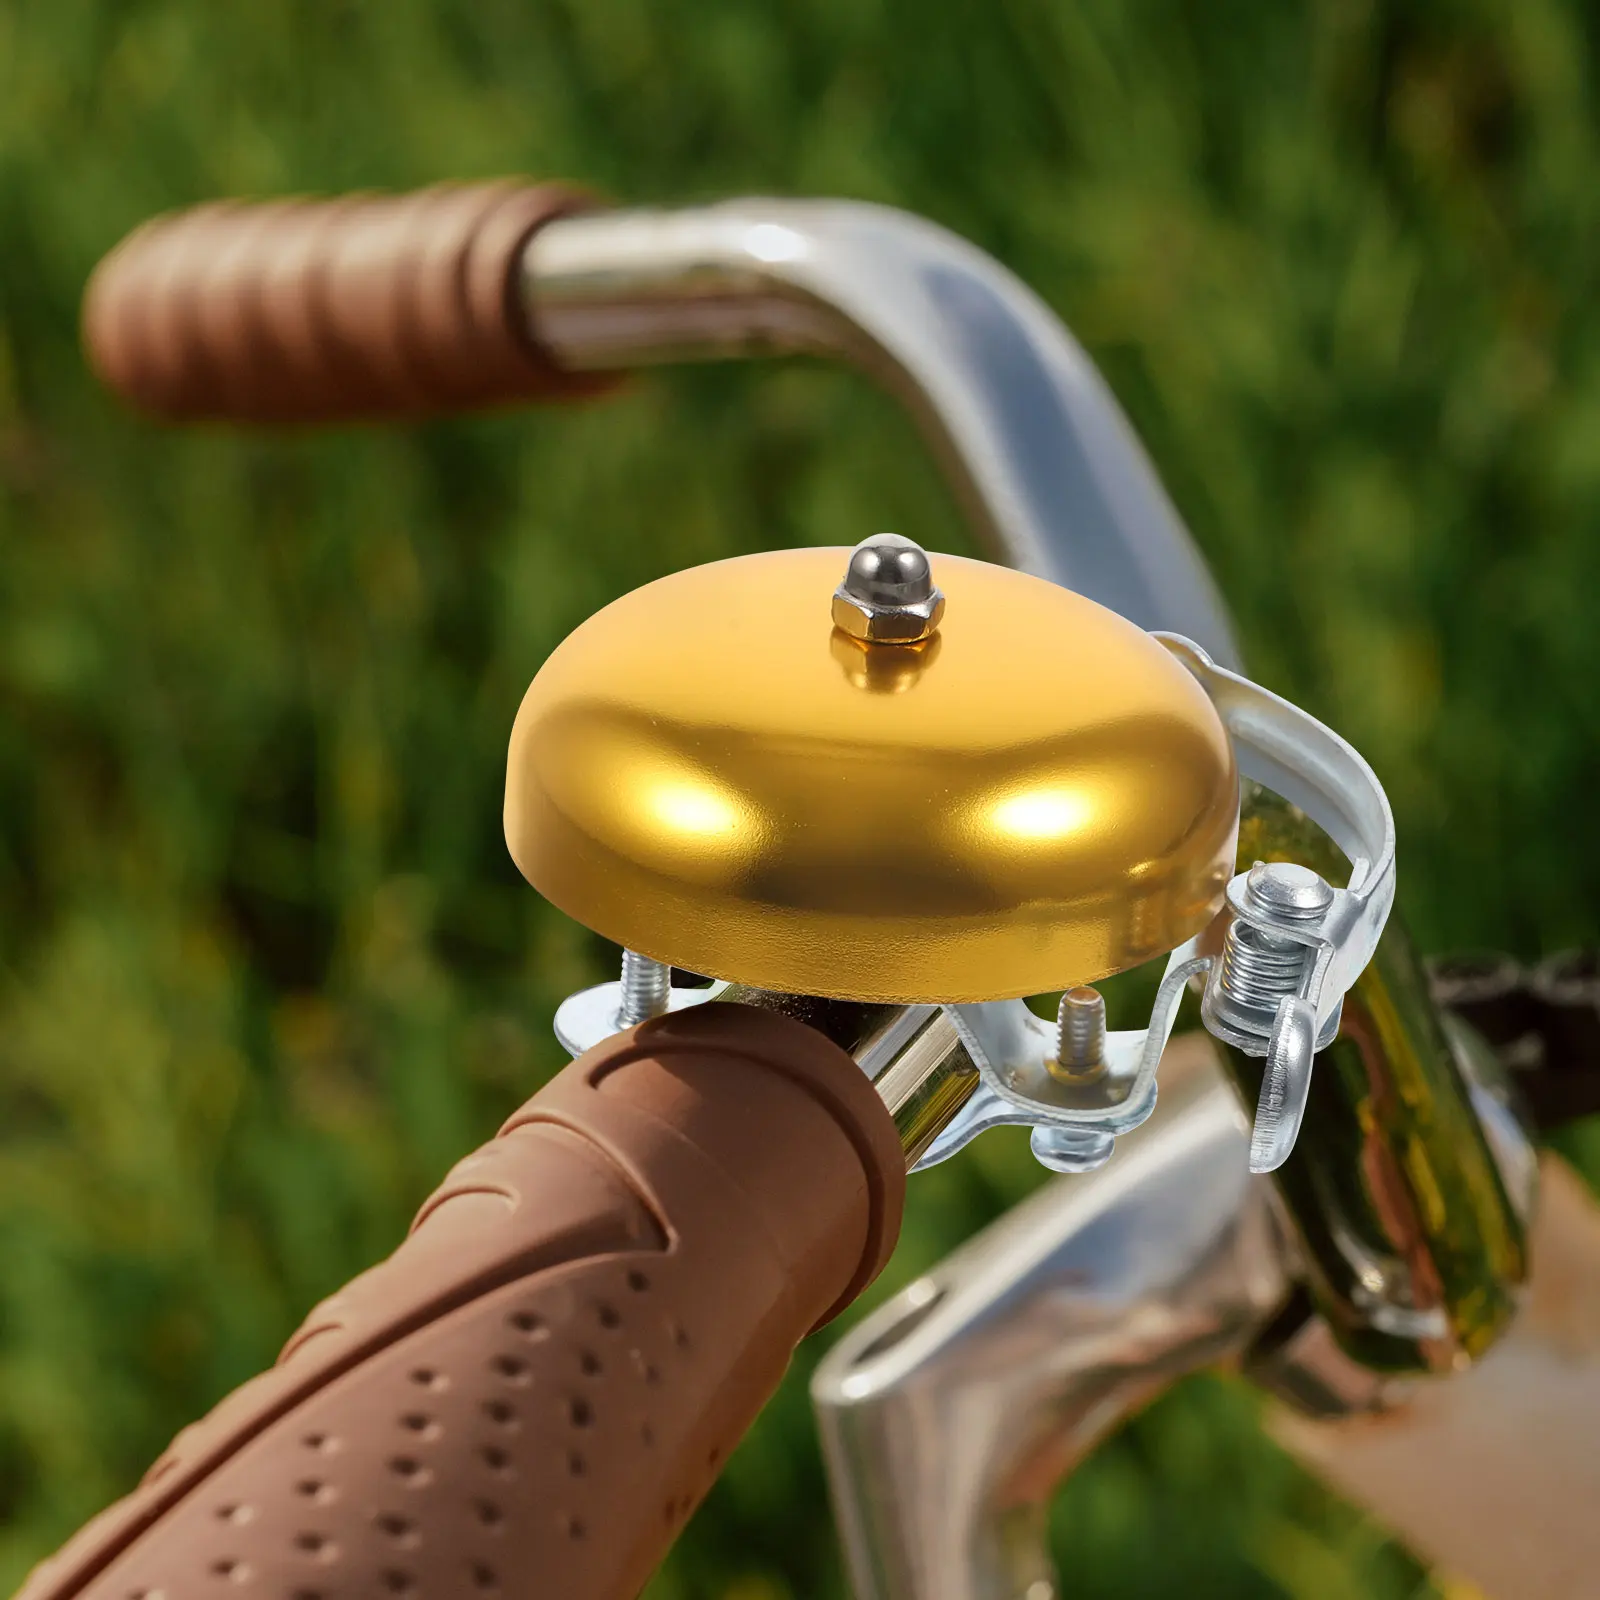 

1Pcs Vintage Classic Bicycles Bell Cycling Bike Crisp Ringtones Horn Loud Sound Aluminum Alloy Handlebar Grips Accessories